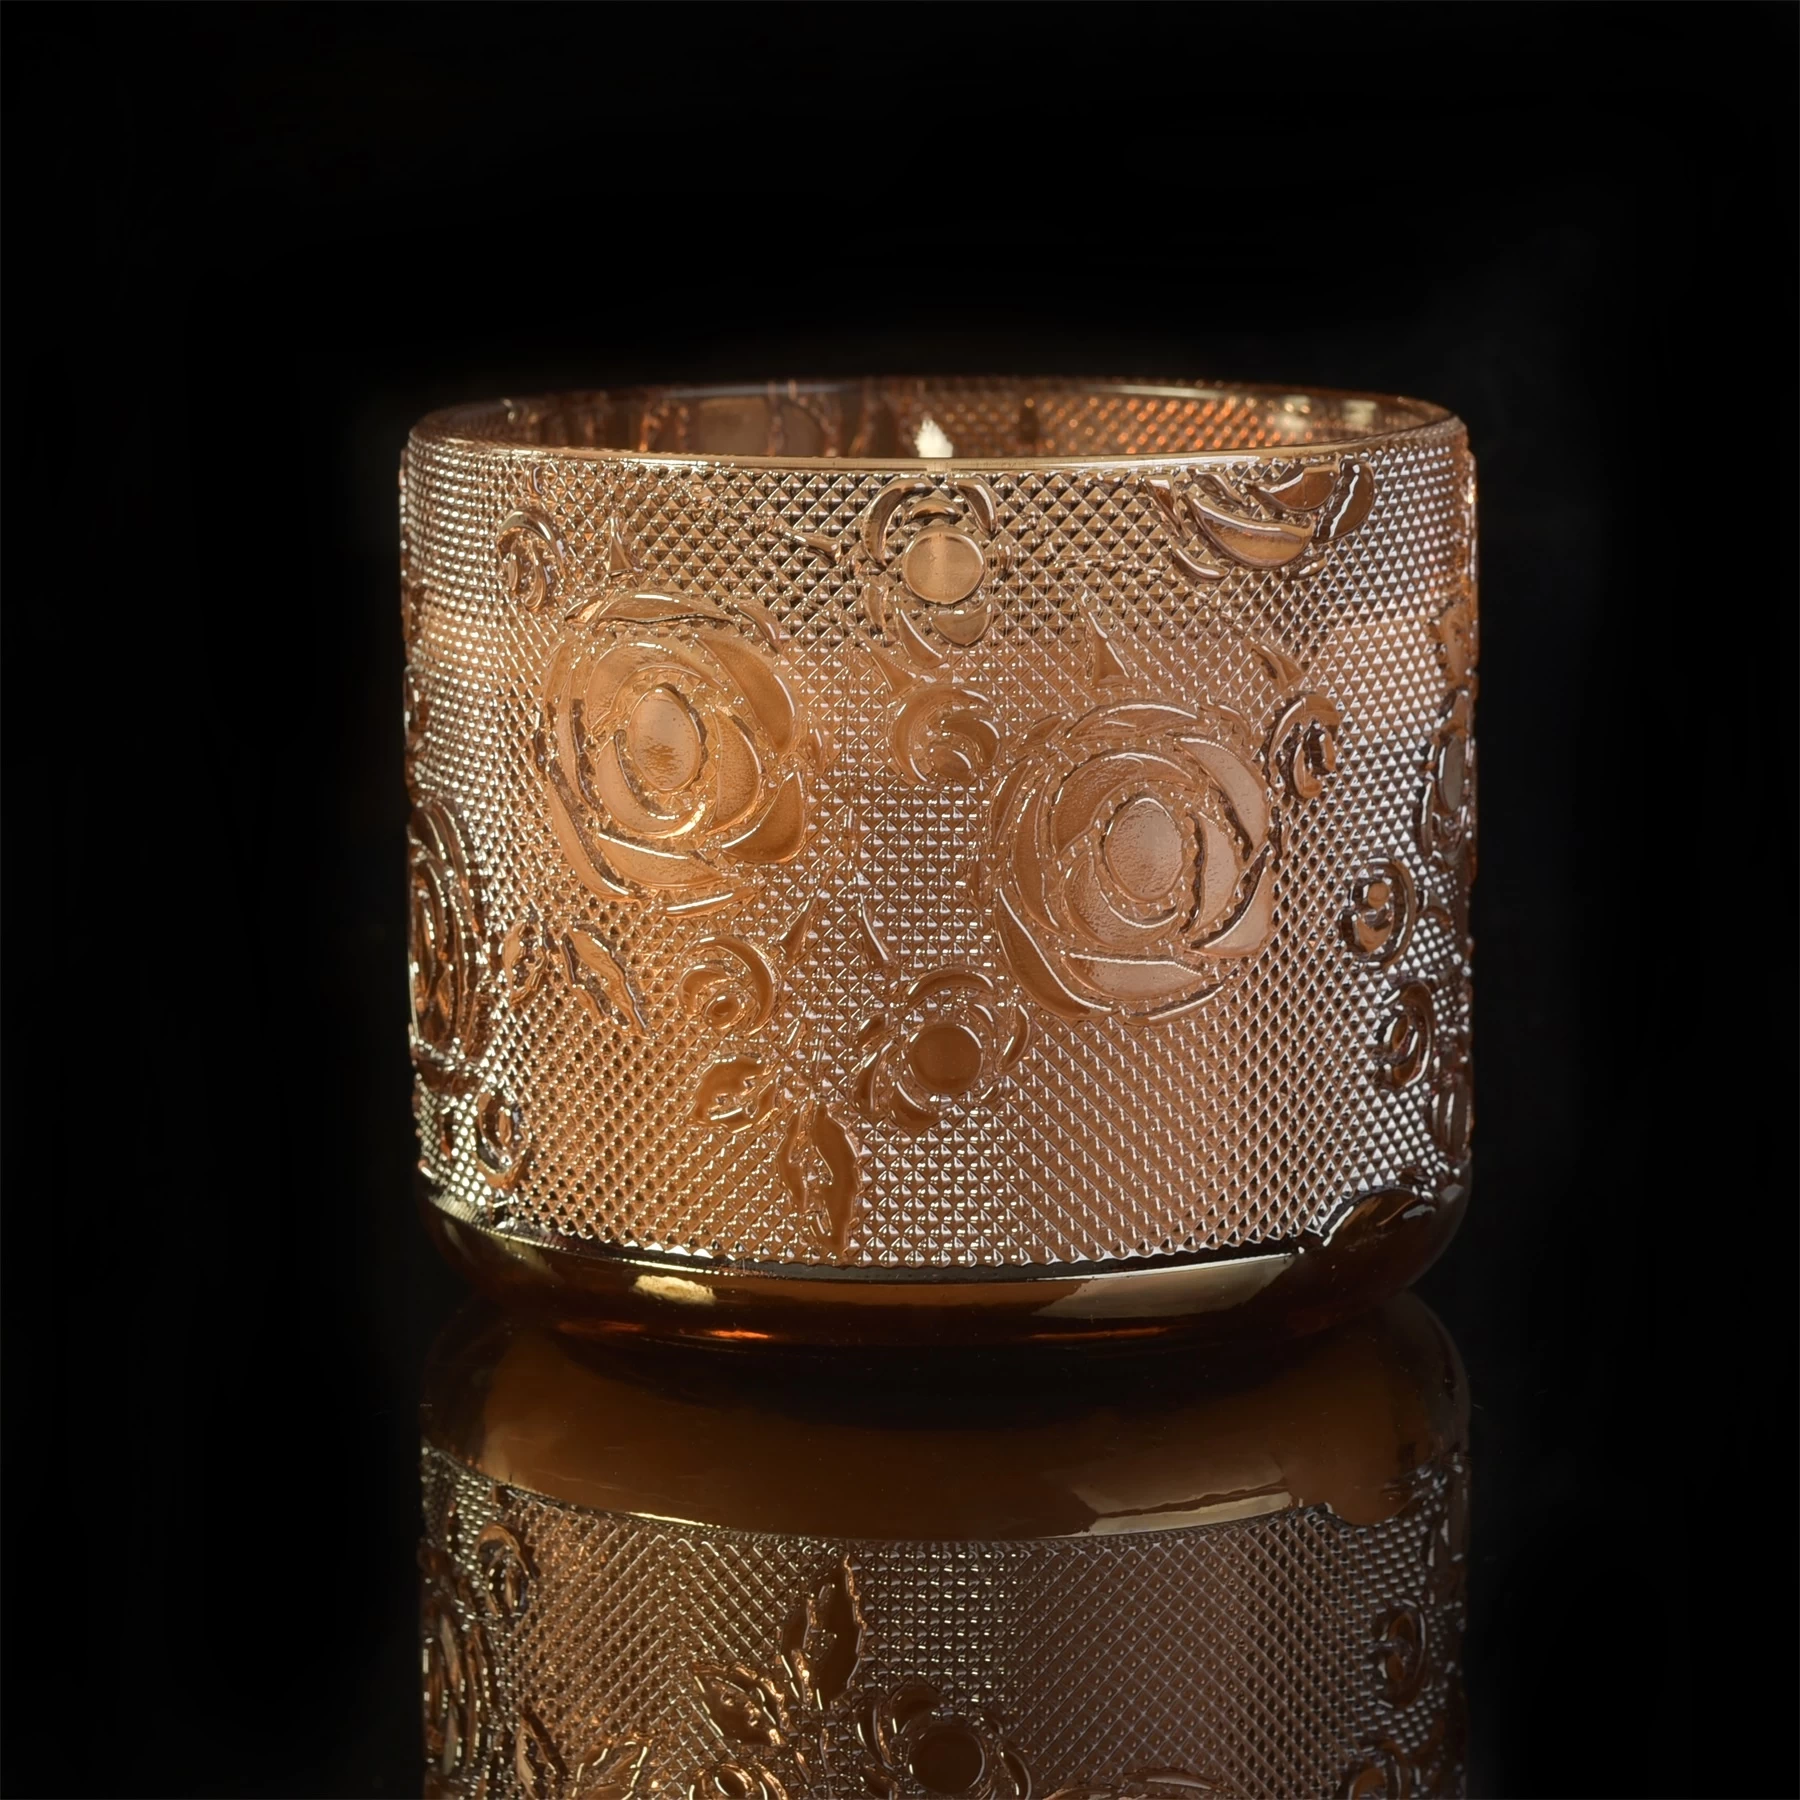 Wholesales rose votive custom glass jars for candle making